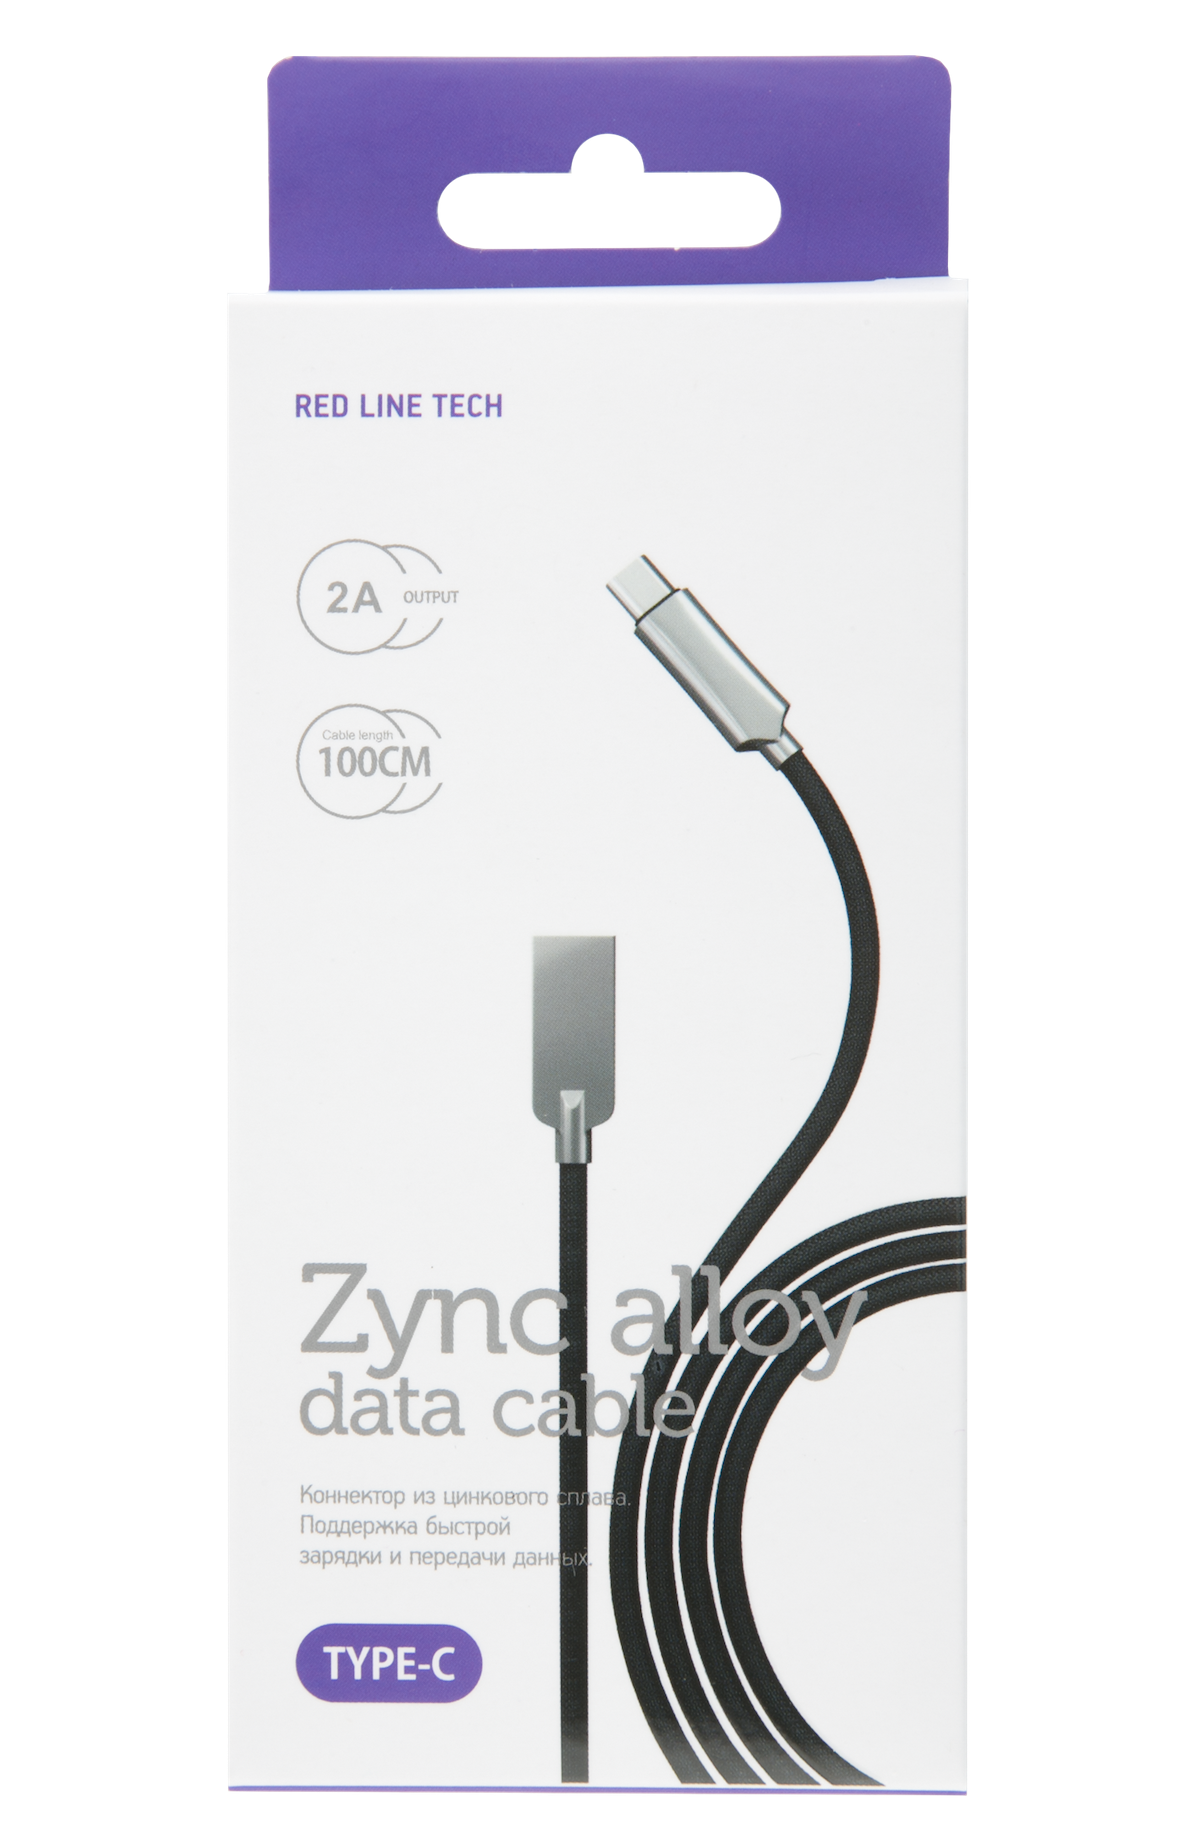 Дата-Кабель Red Line LX13 Zync alloy USB - Type-C